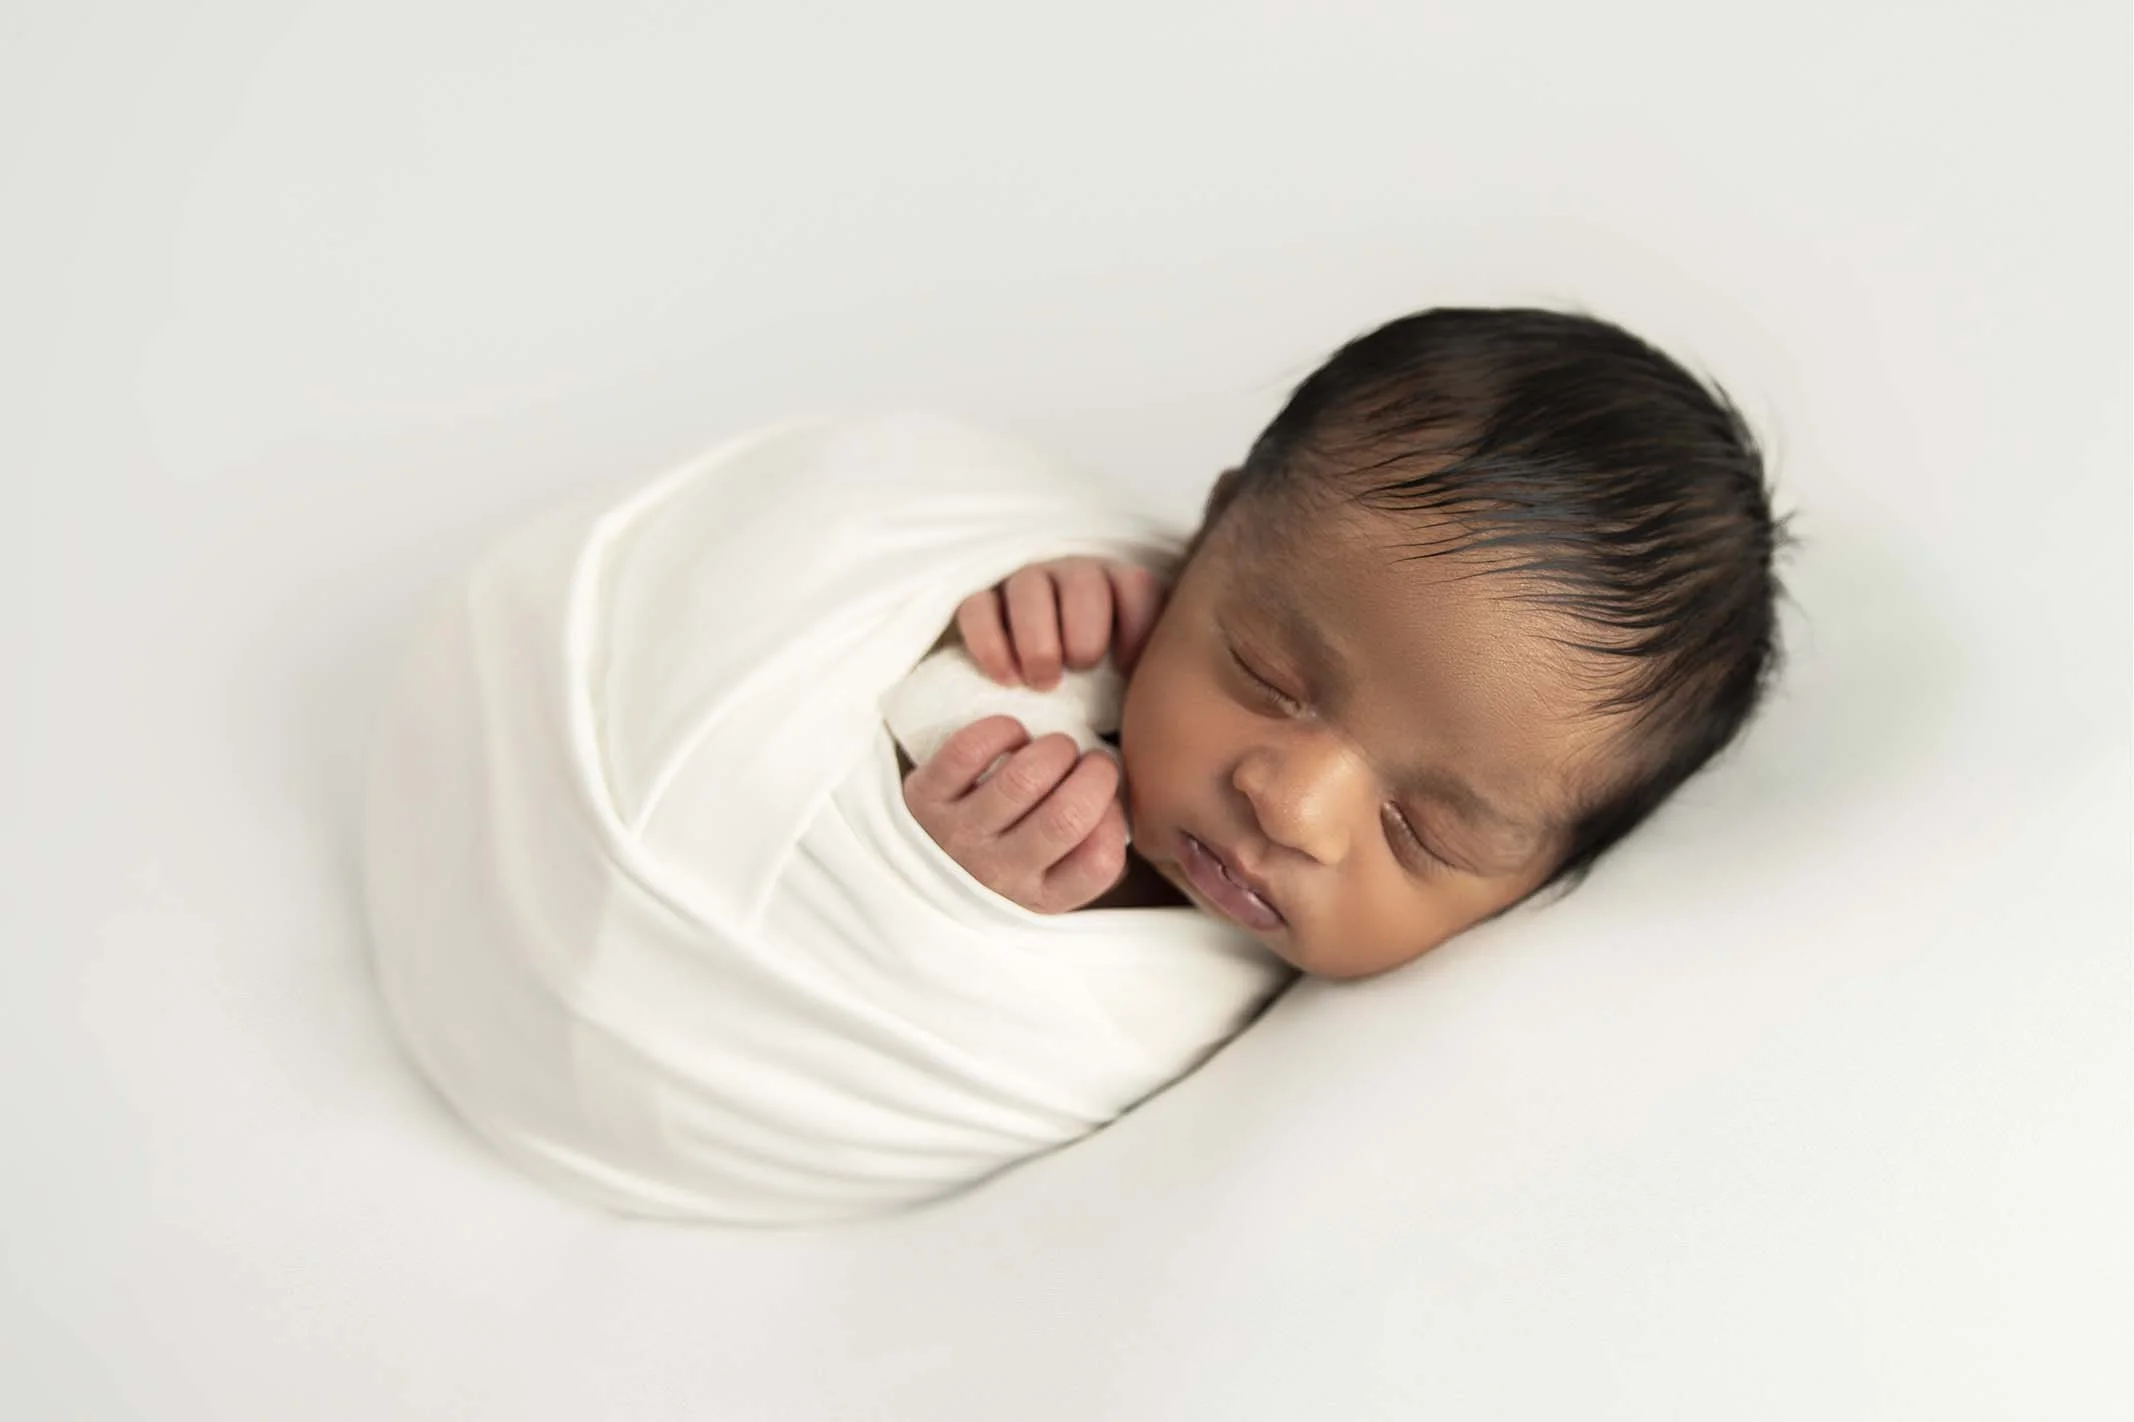 Newborn photoshoot in milton keynes low prices